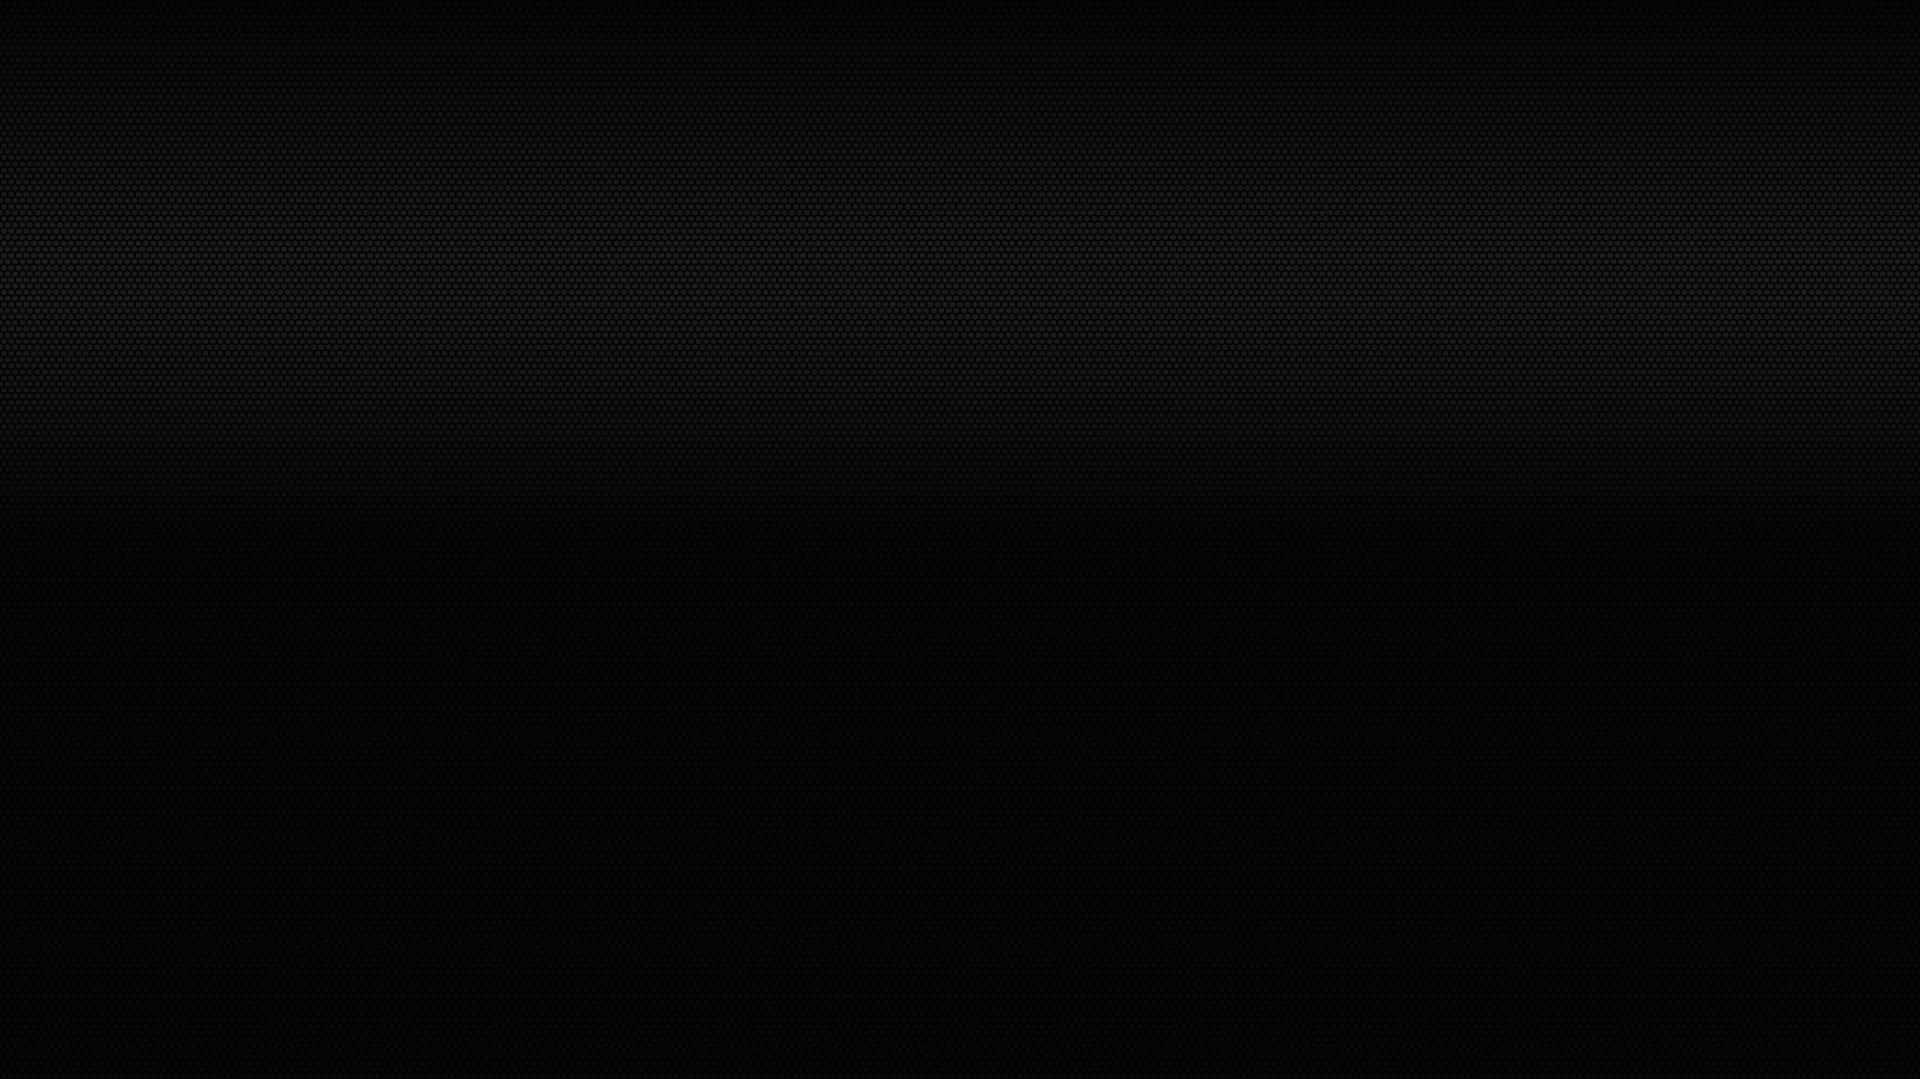 Free download Plain Black Backgrounds [1920x1080] for your Desktop ...